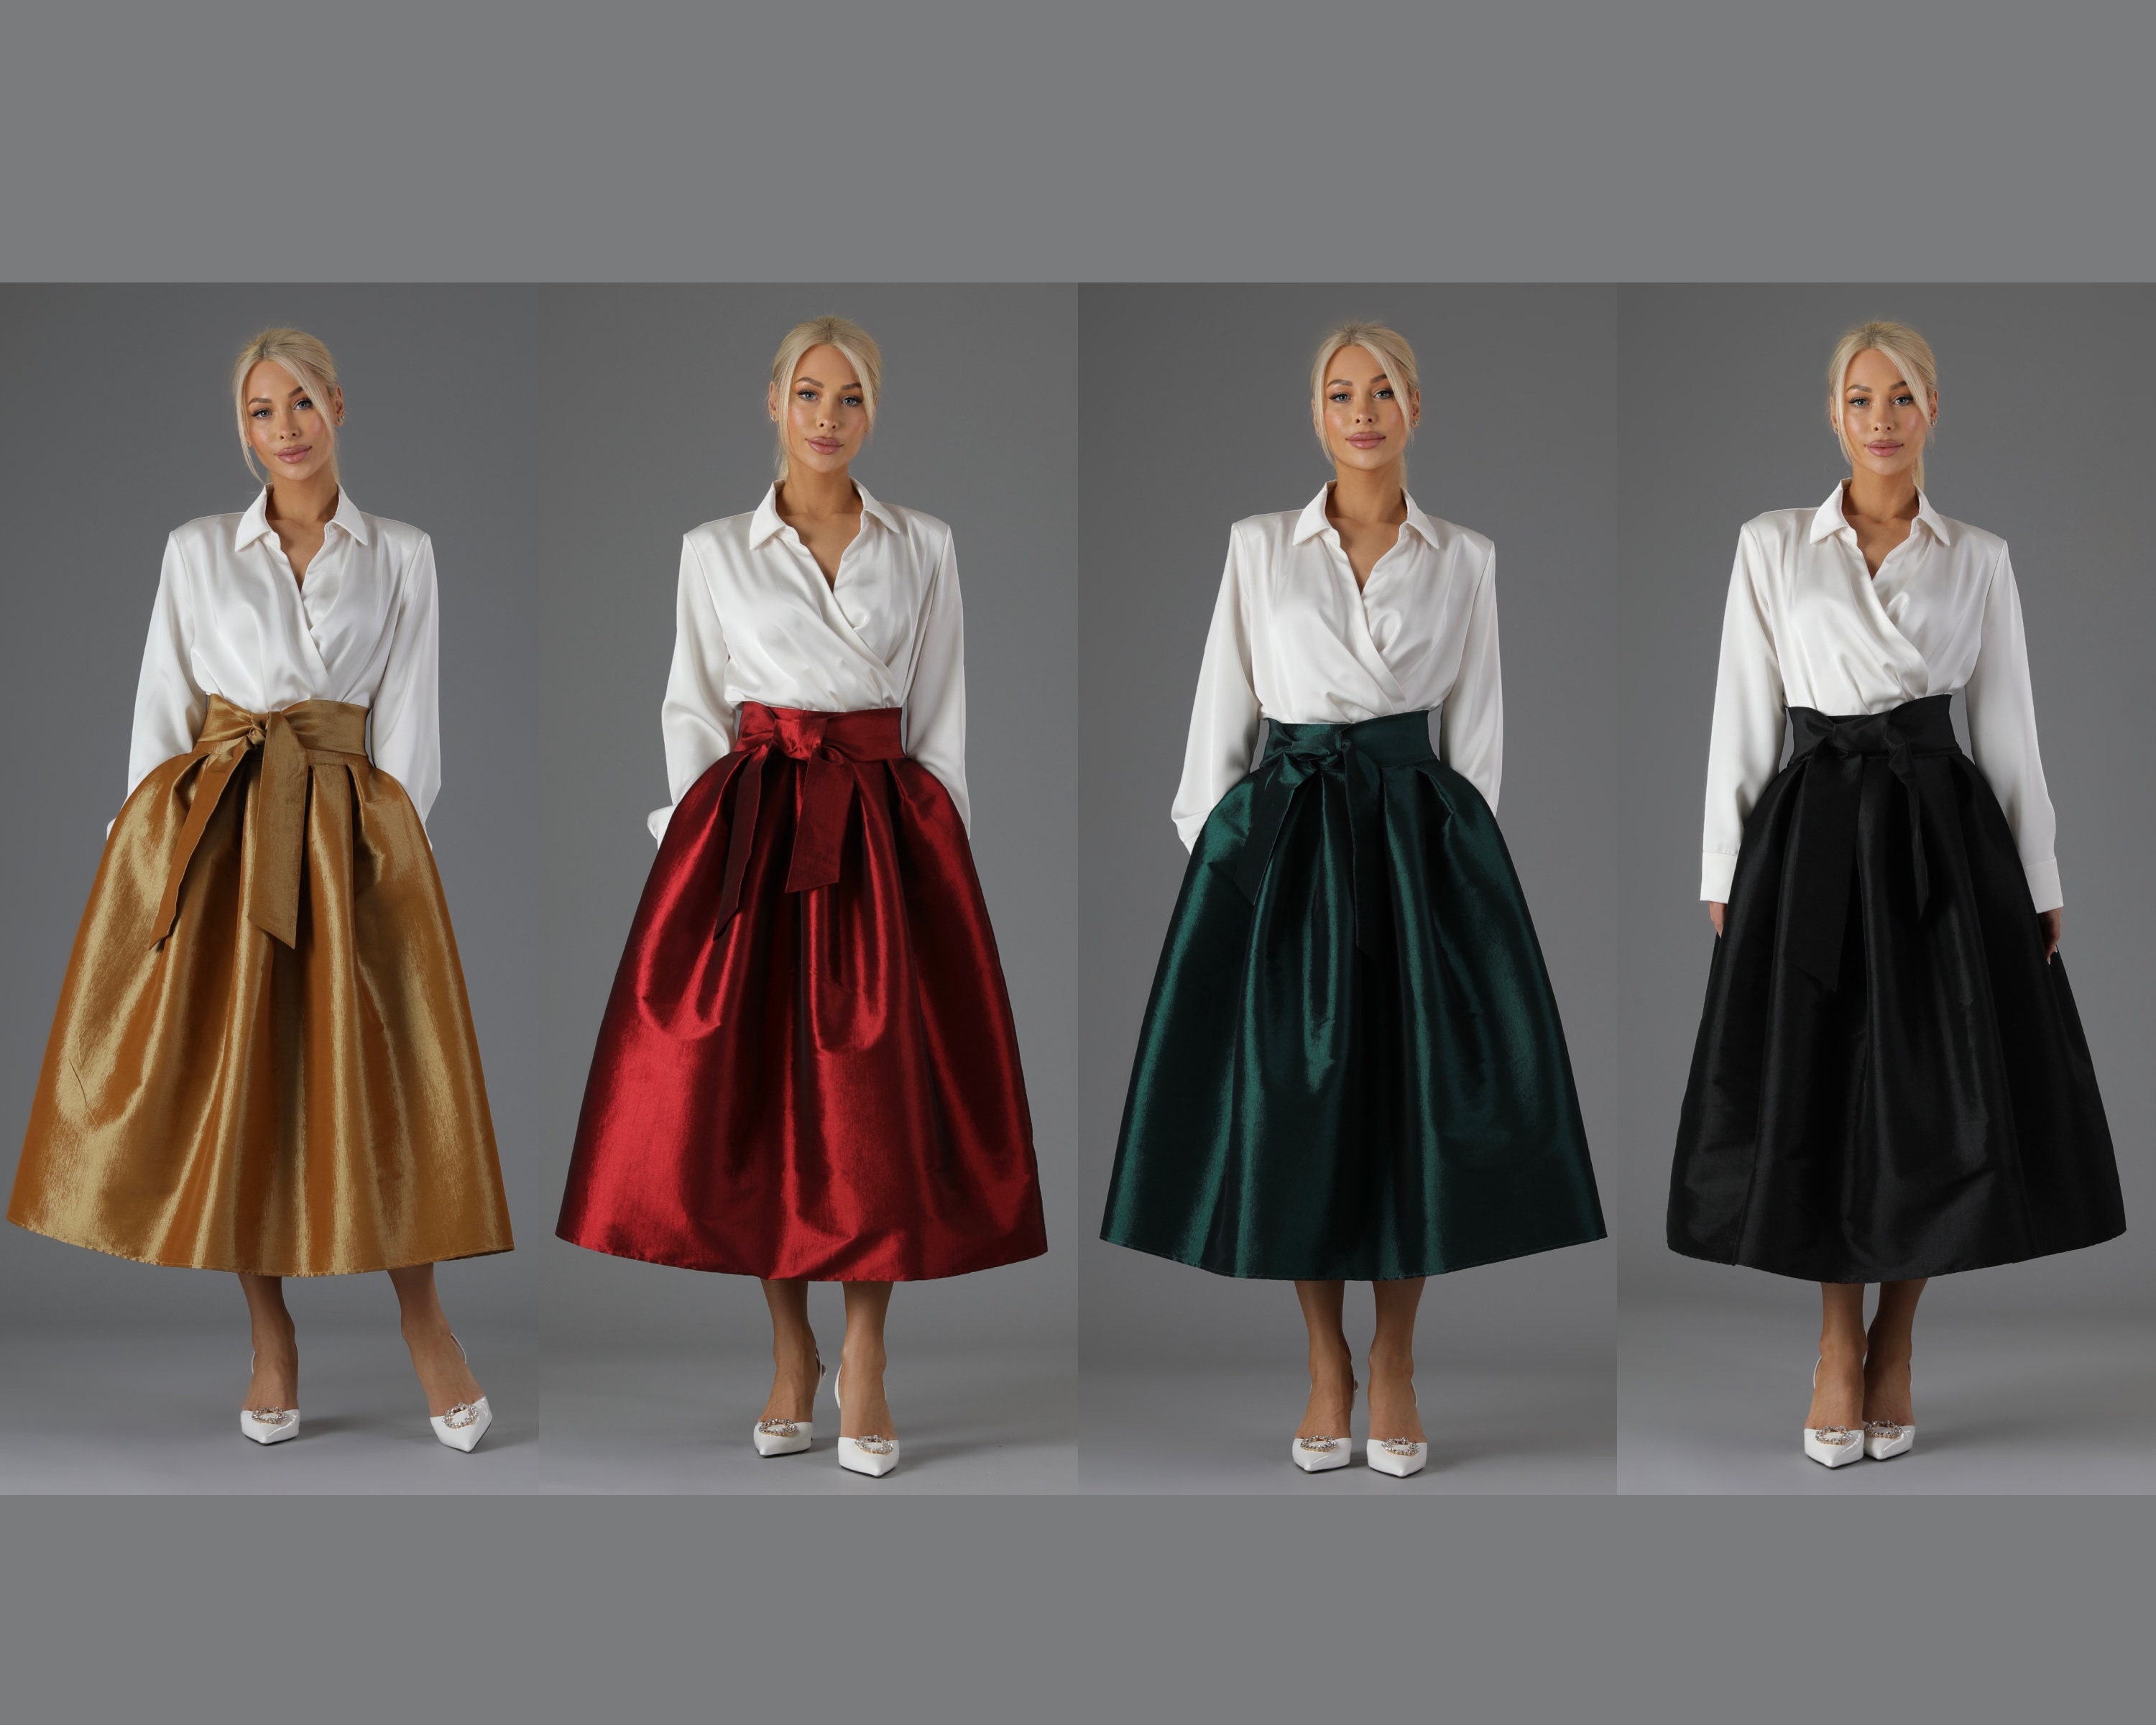 Taffeta Skirt With Pockets Skirt for Women Classic Skirt Ball Gown